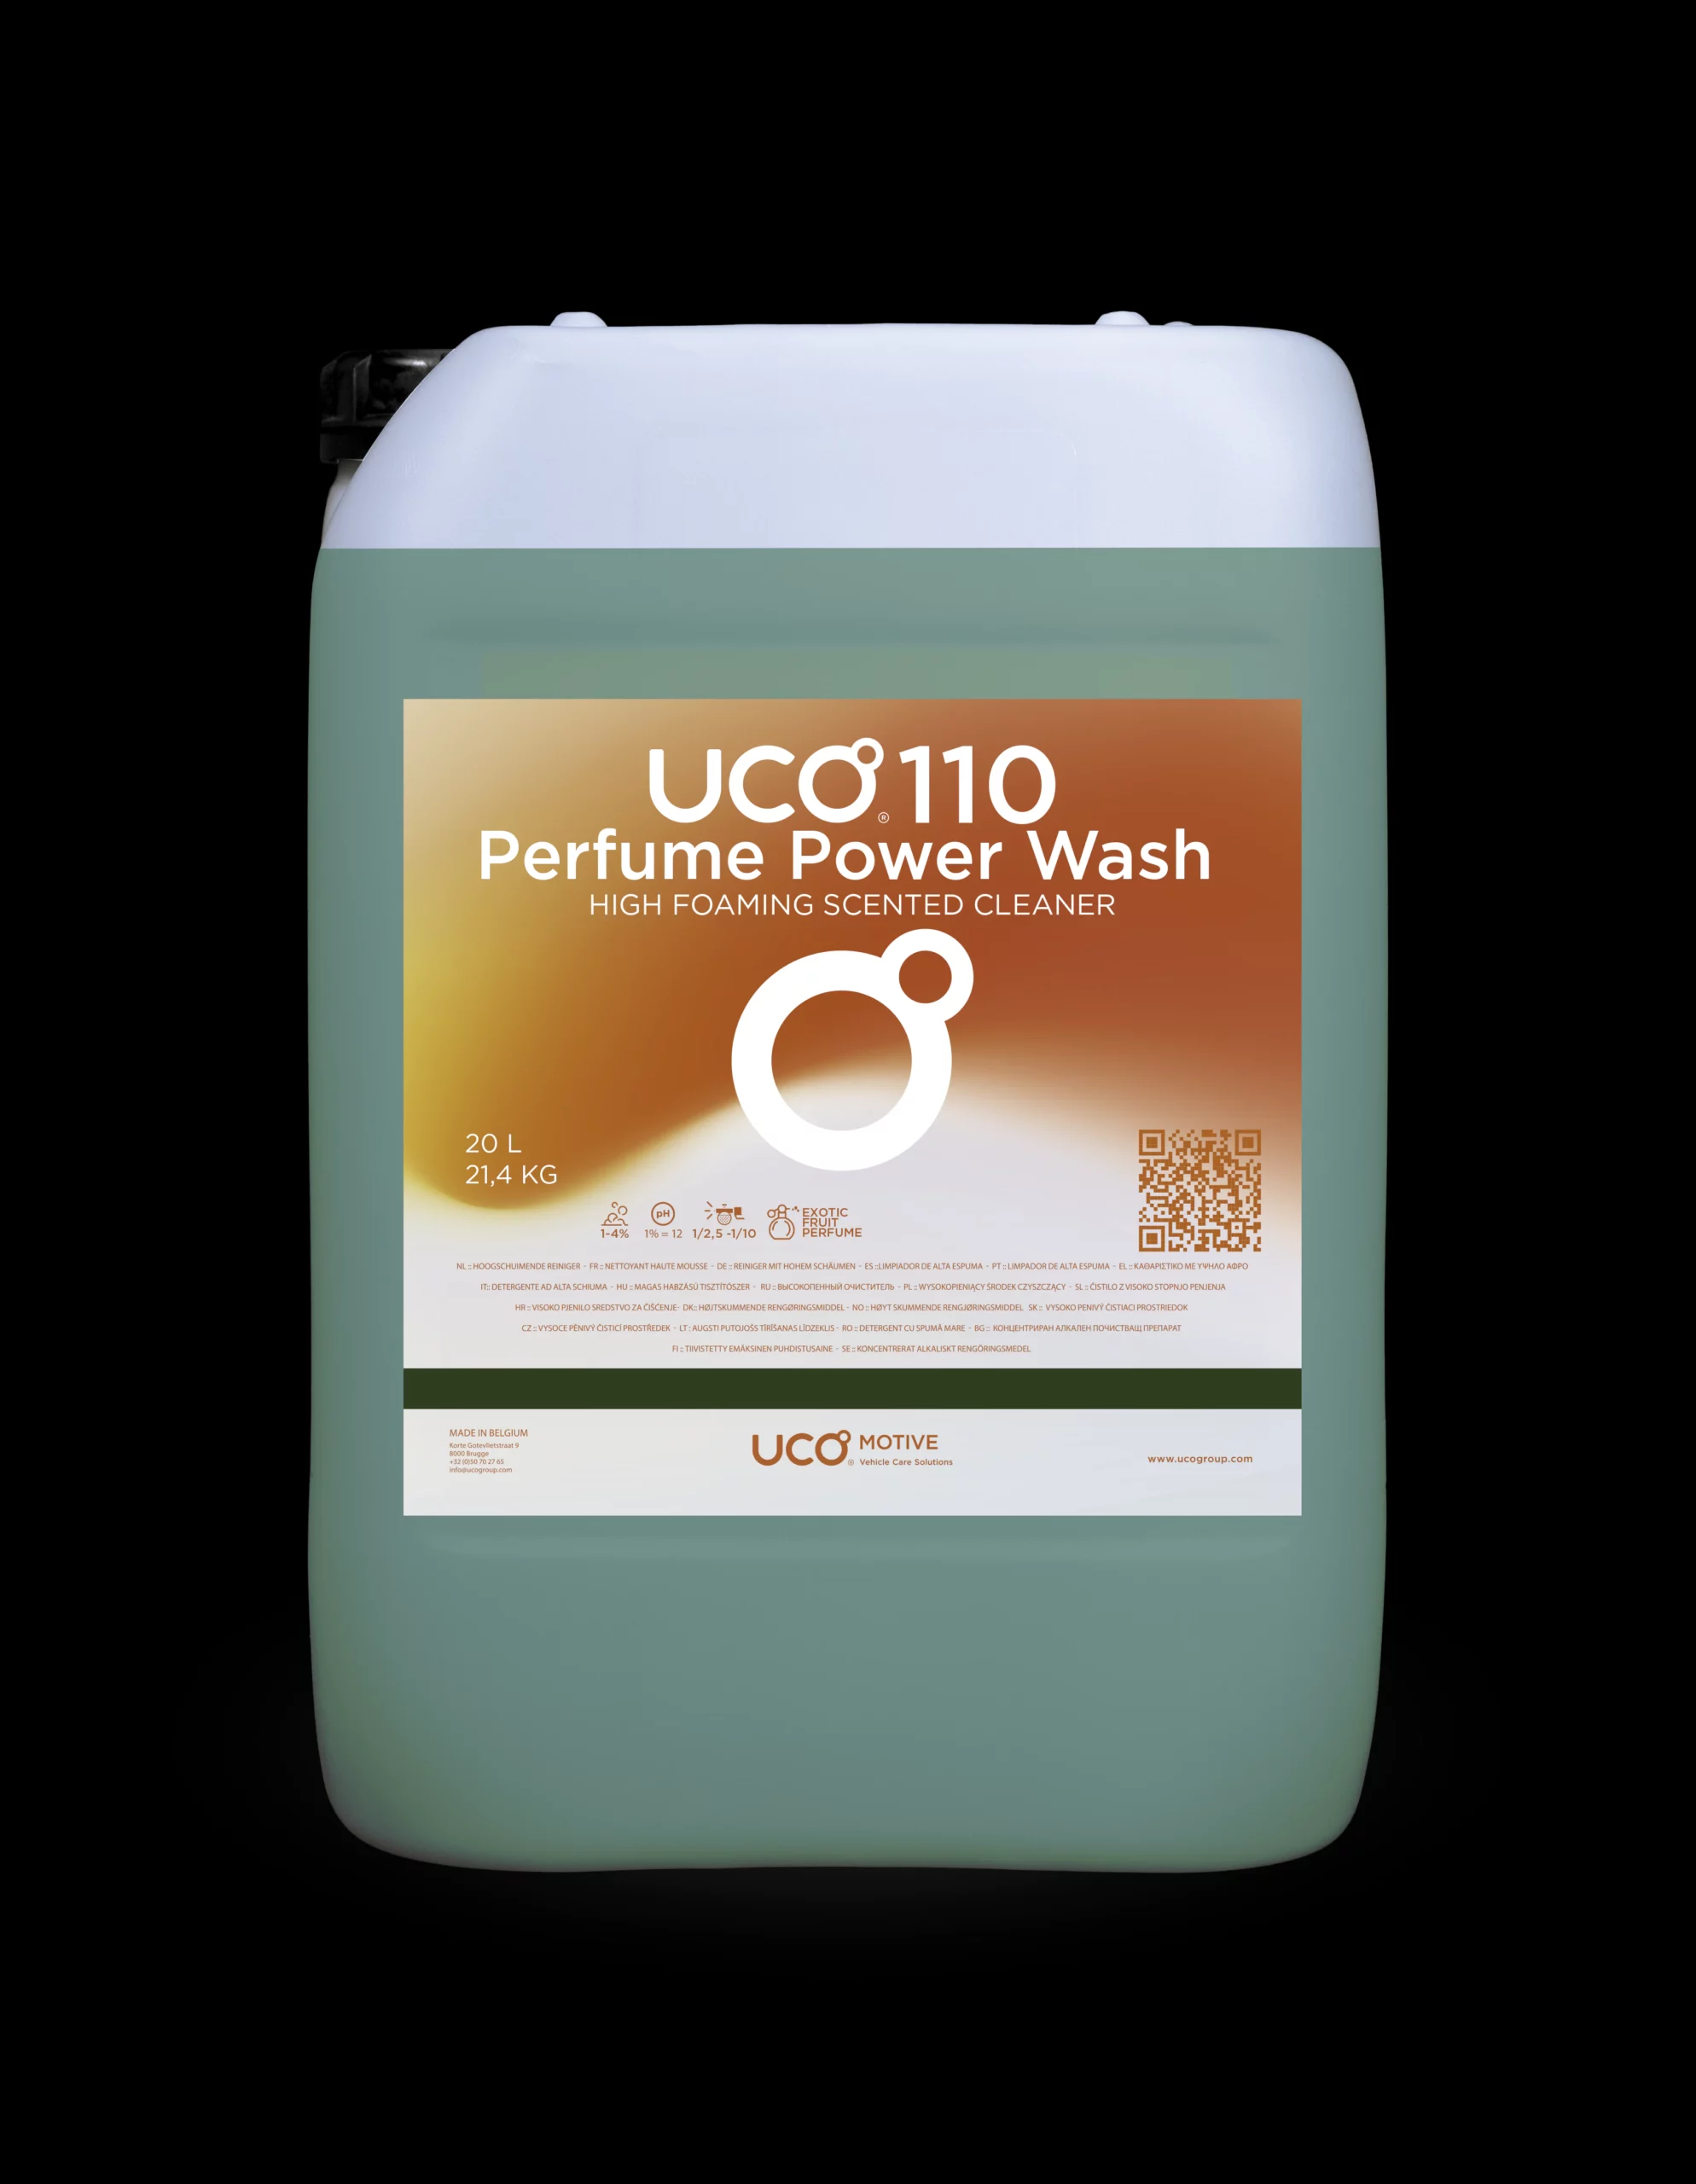 UCO110 Perfume Power Wash